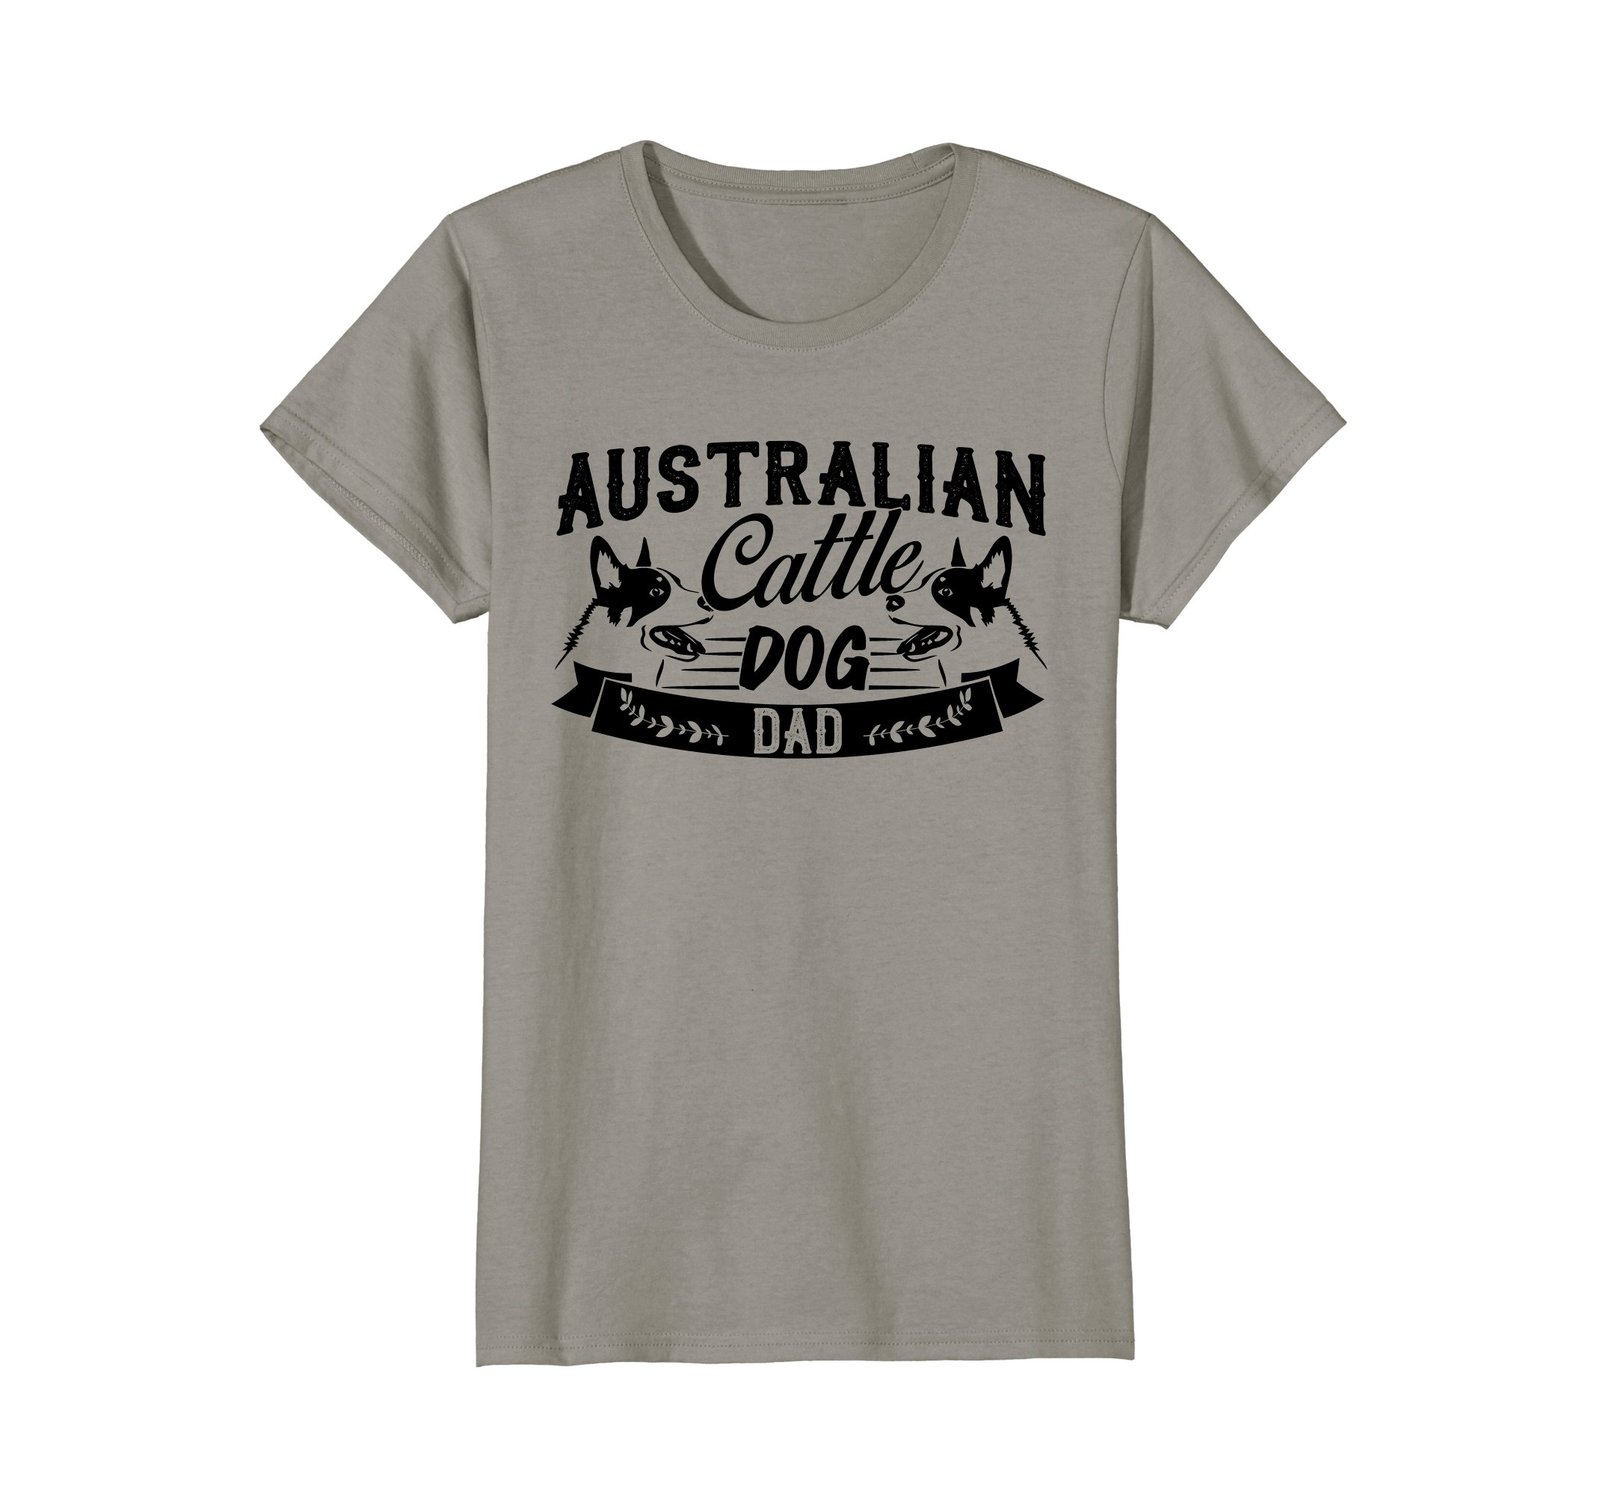 Australian Cattle Shirt - Australian Cattle Dog Dad Tshirts - $19.99 - $20.99